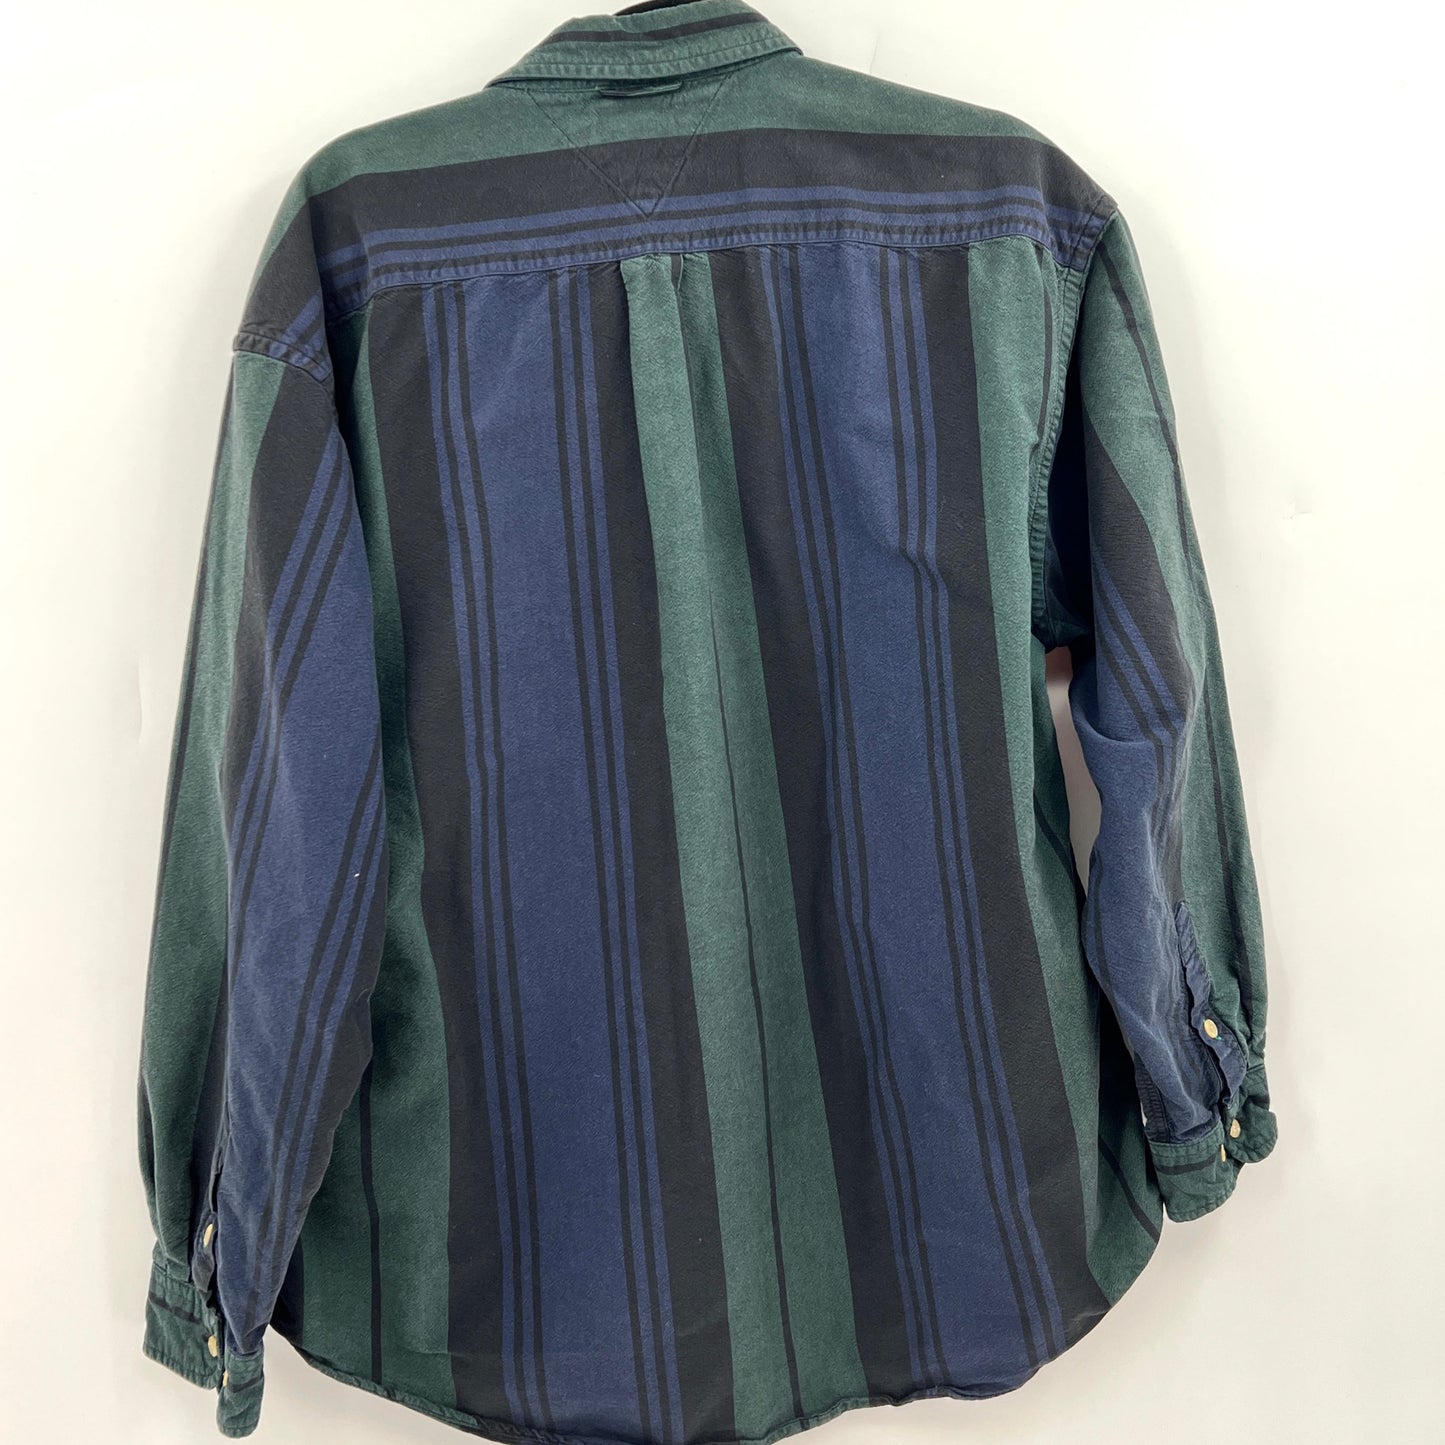 SOLD - Vintage Striped Tommy Hilfiger Button Down Shirt XL